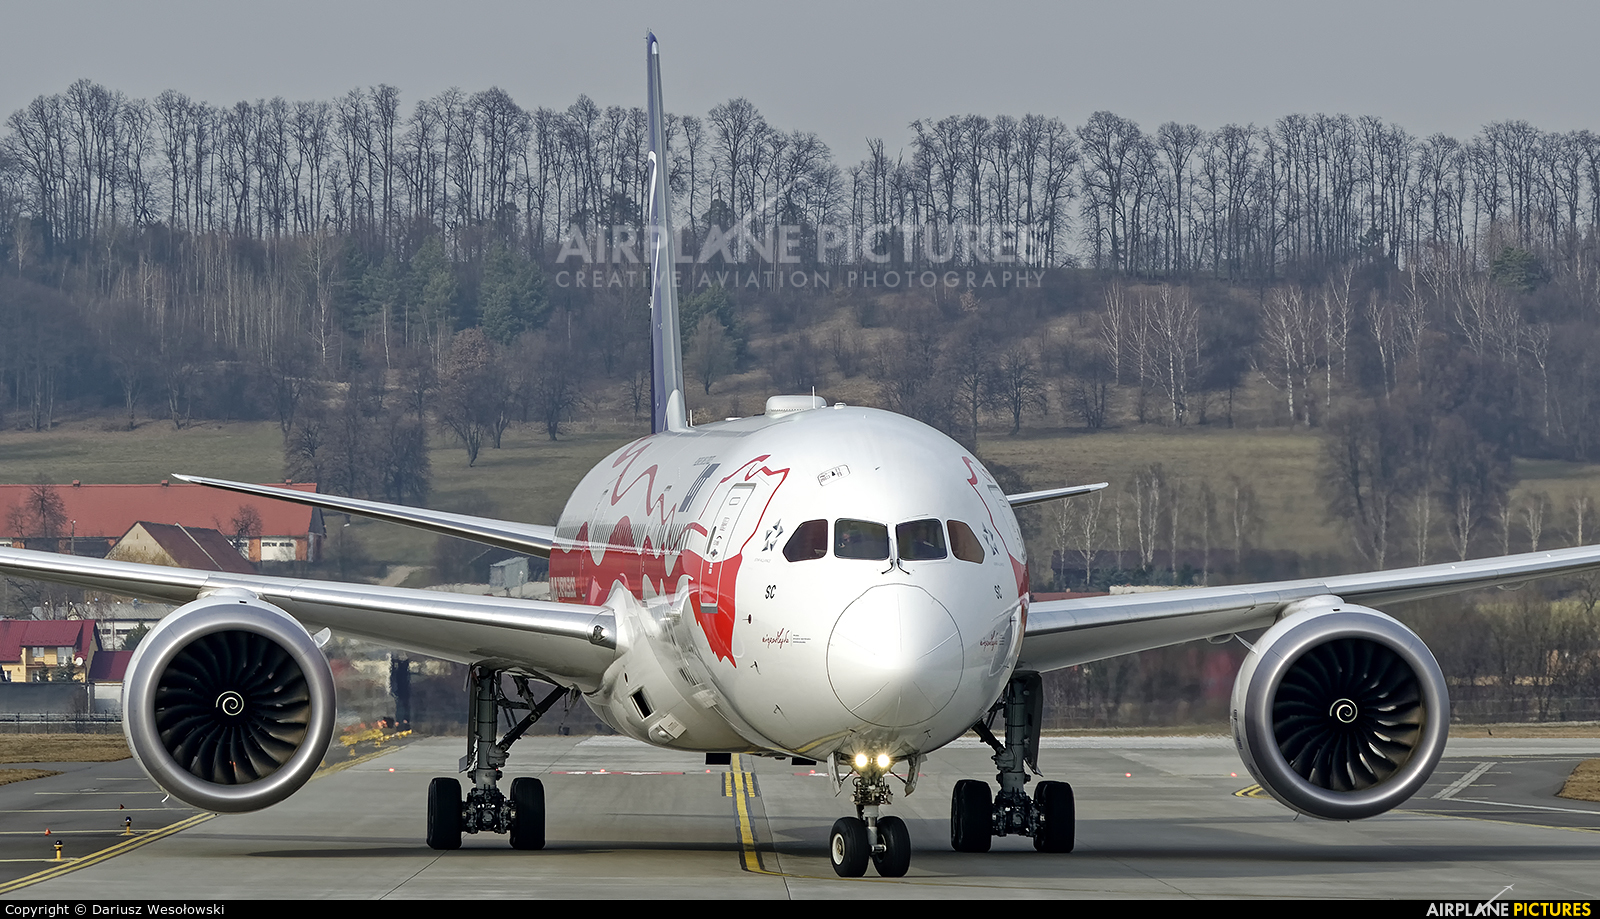 LOT - Polish Airlines SP-LSC aircraft at Kraków - John Paul II Intl